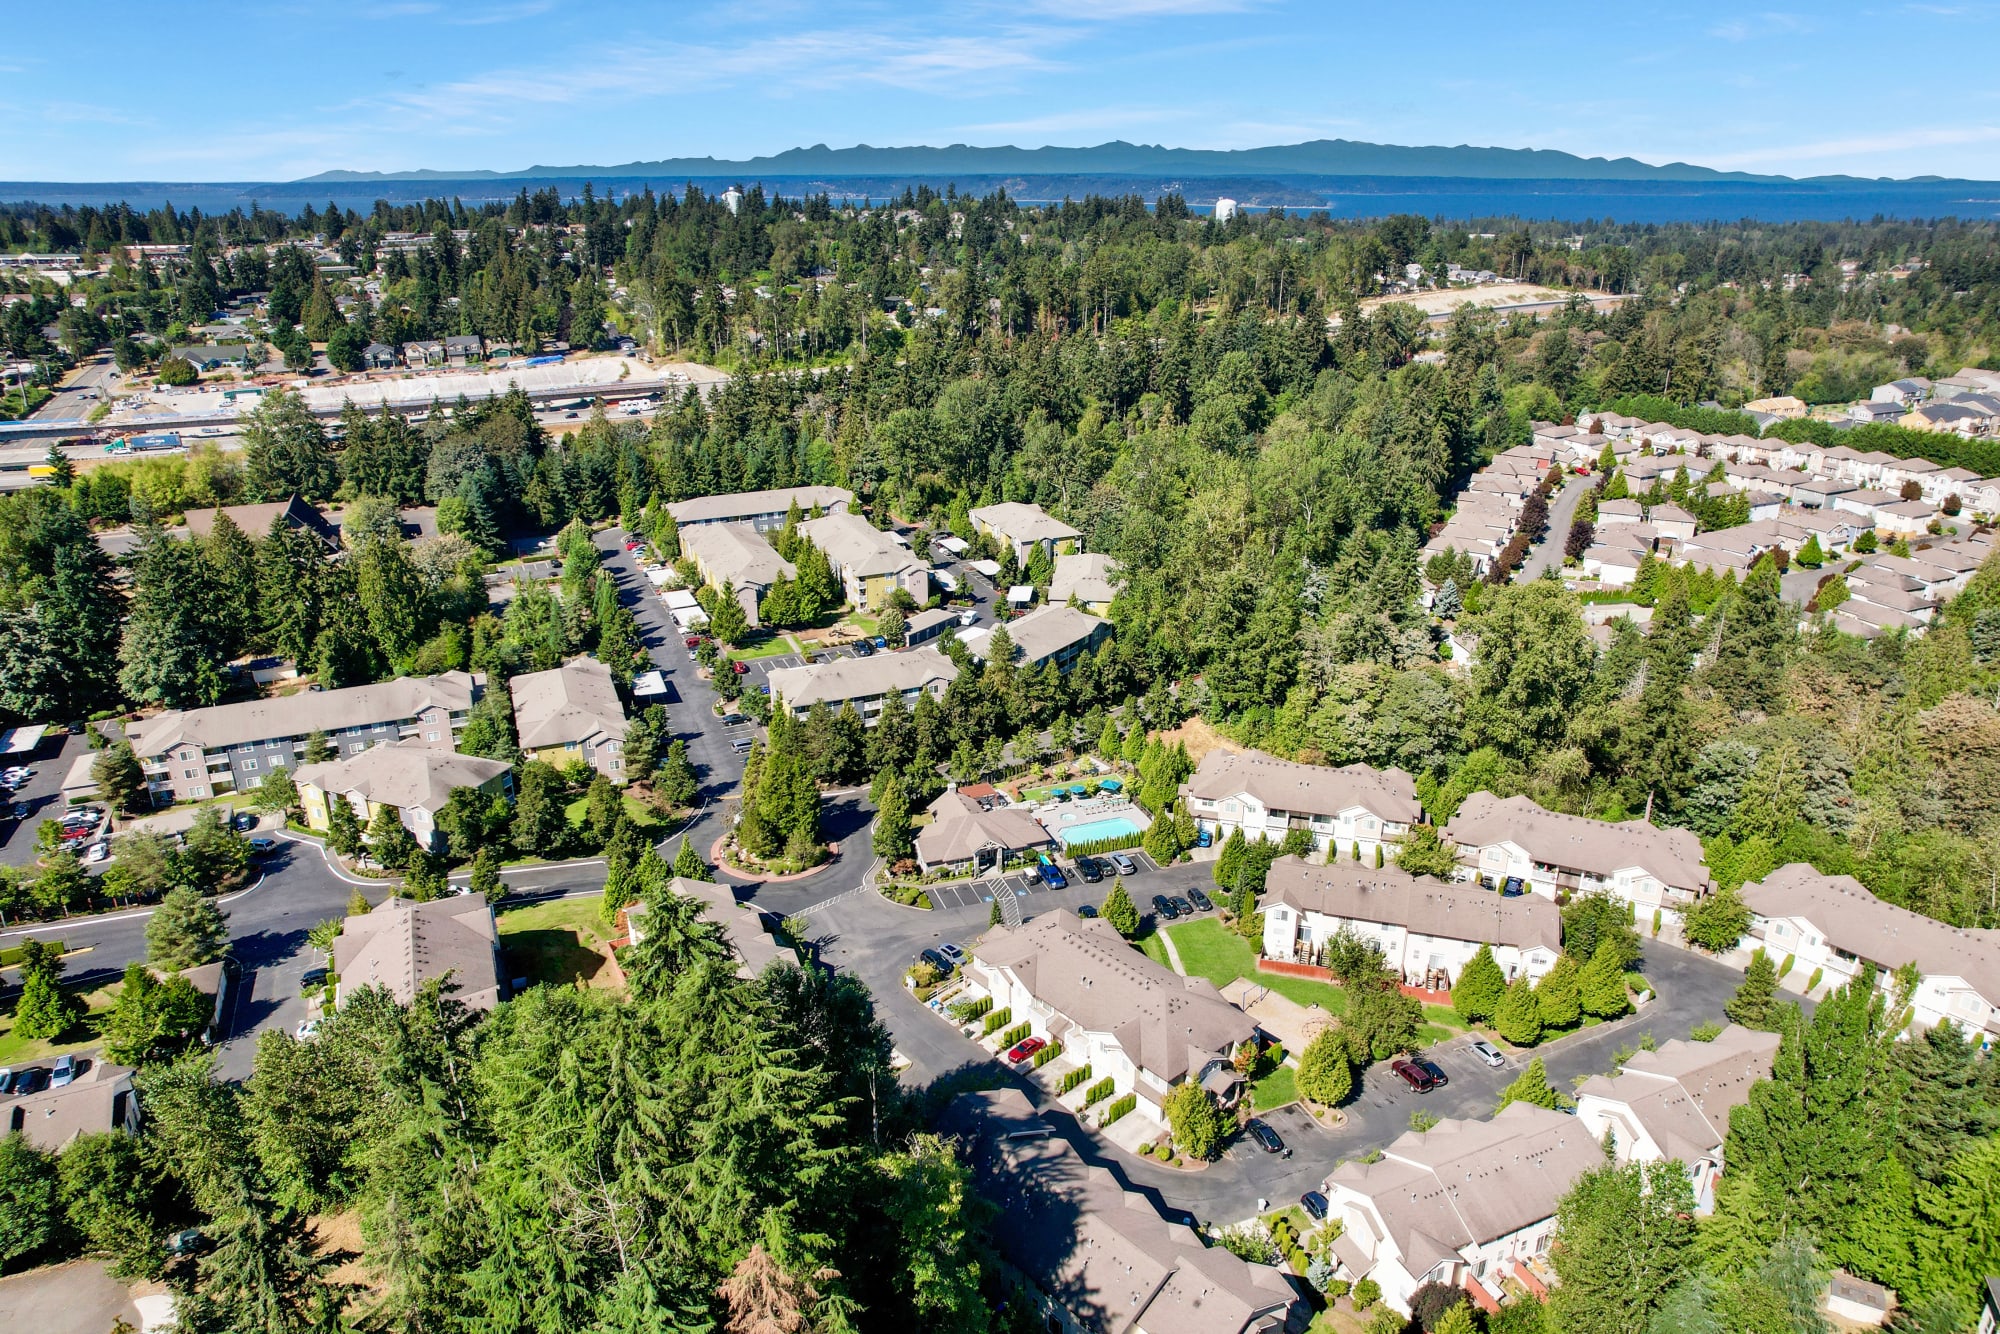 An aerial view of Brookside Village in Auburn, Washington